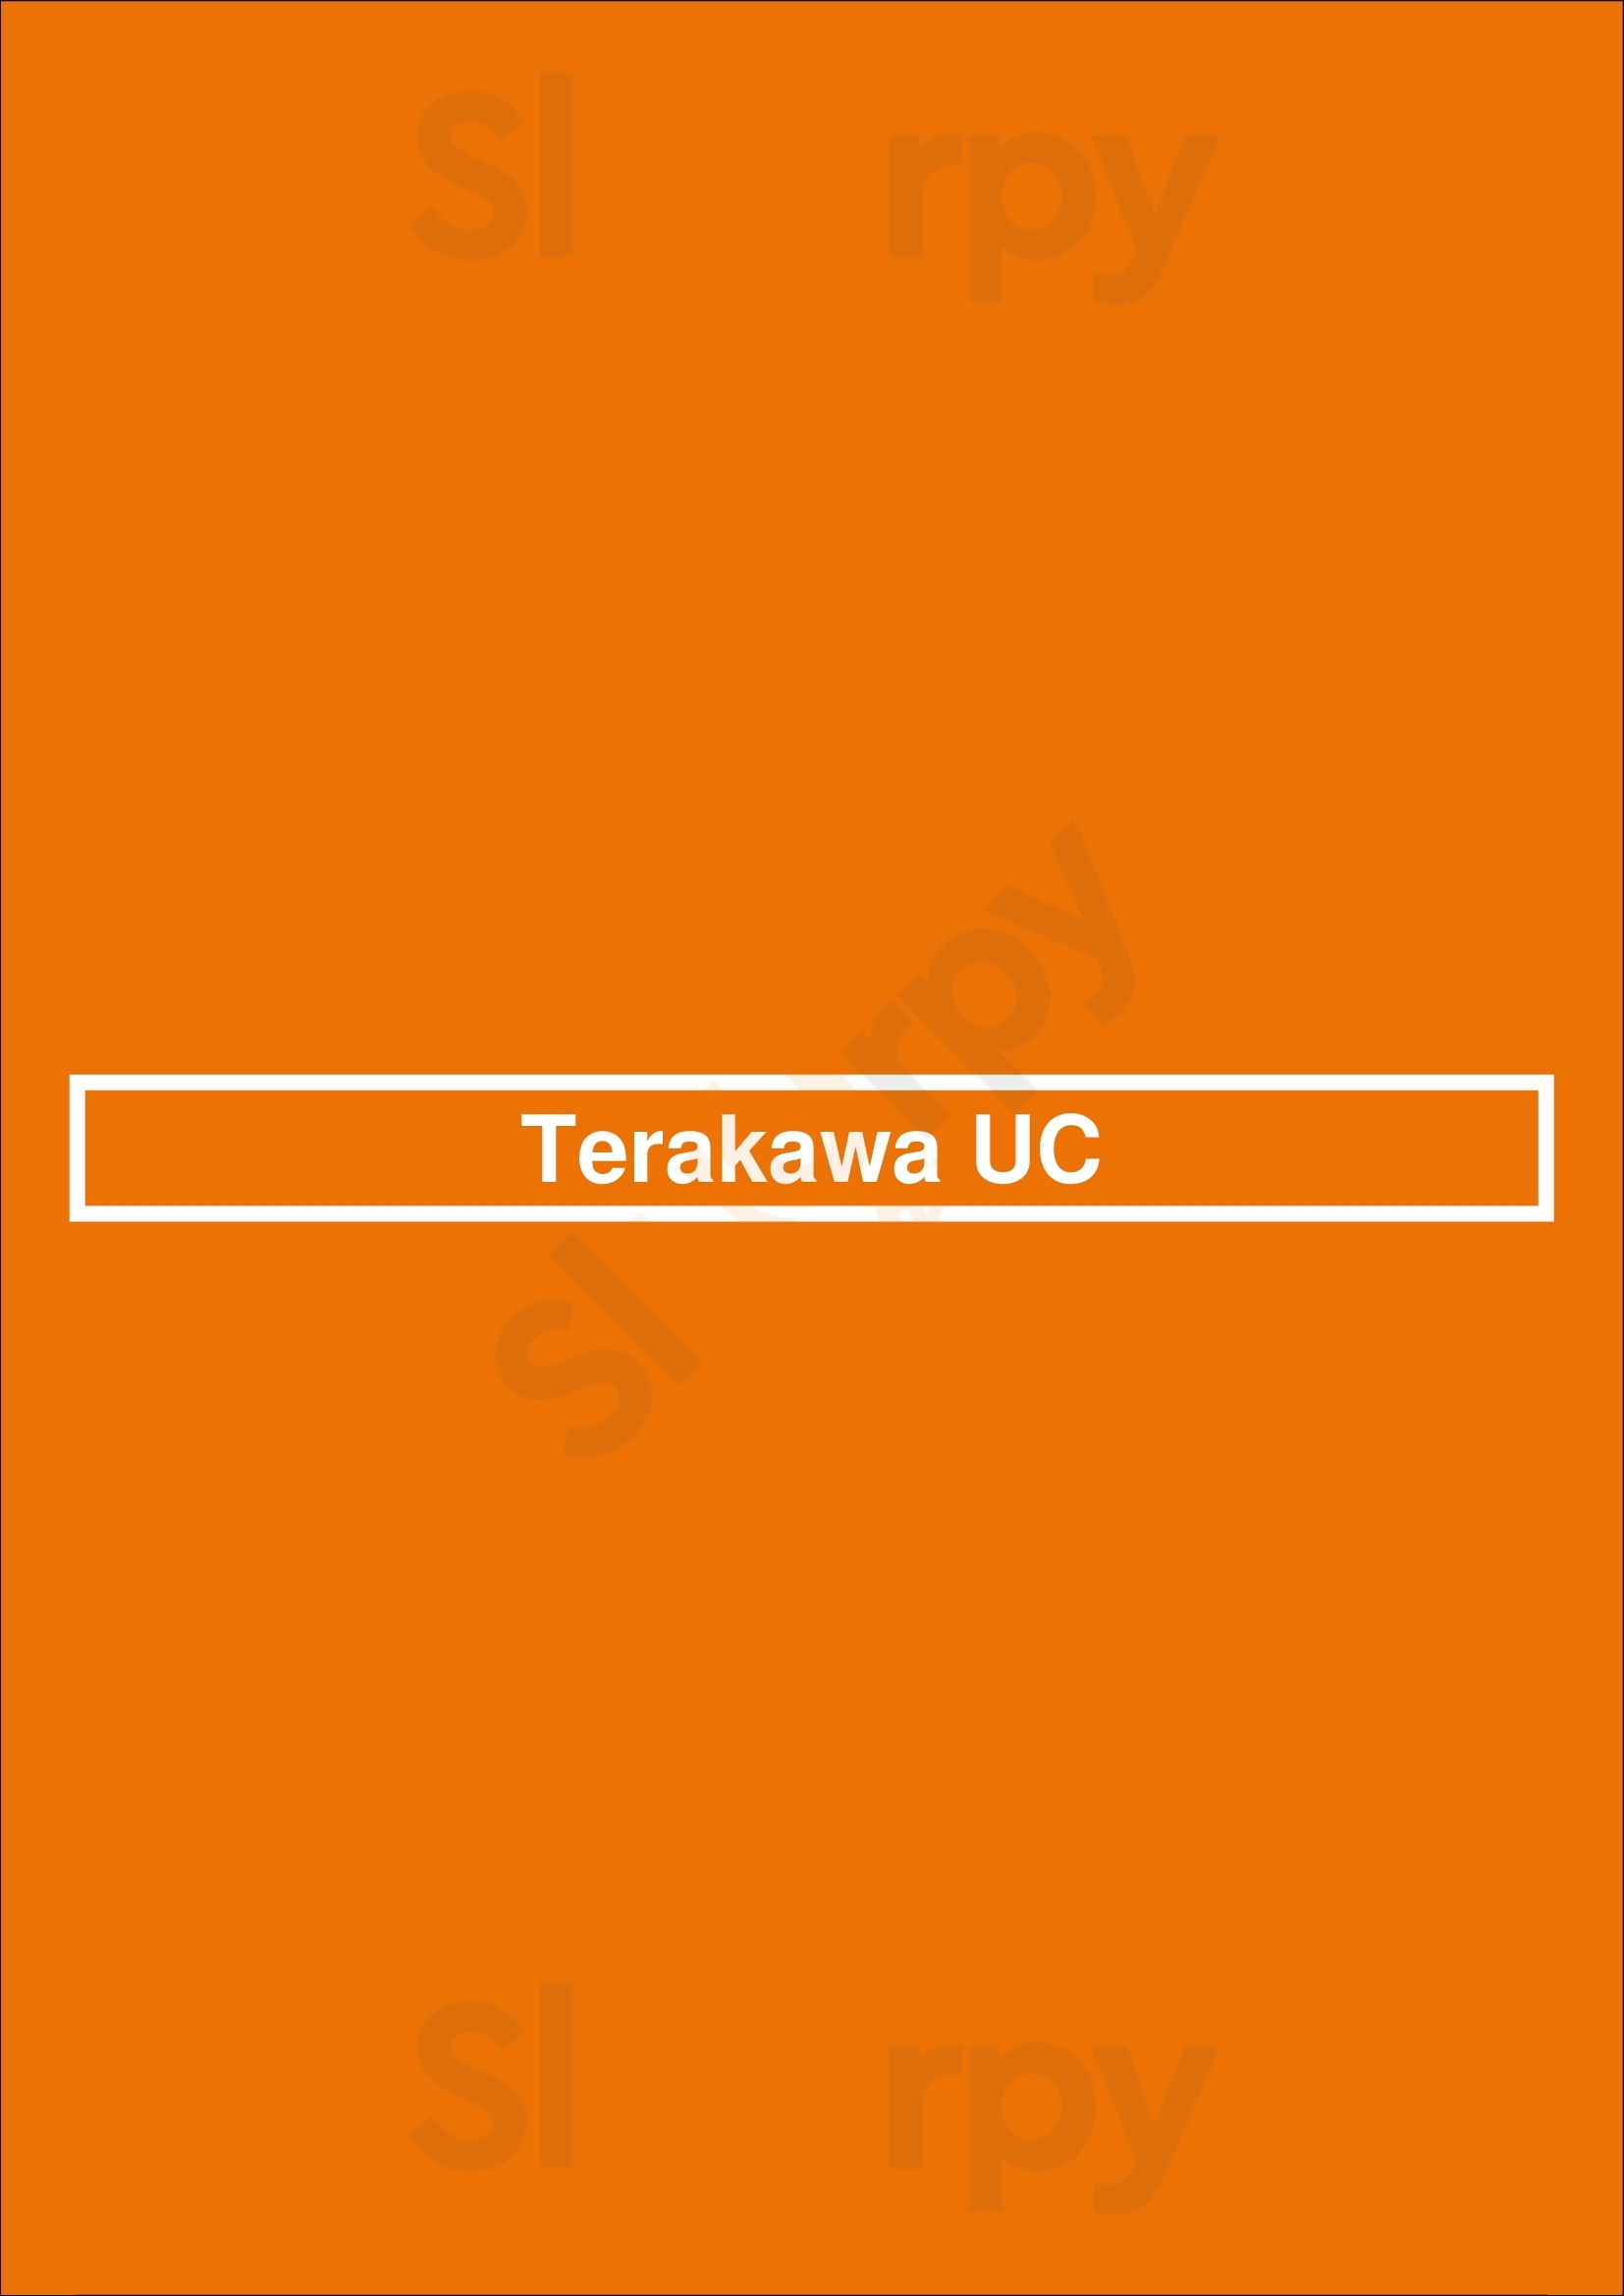 Terakawa Uc Philadelphia Menu - 1